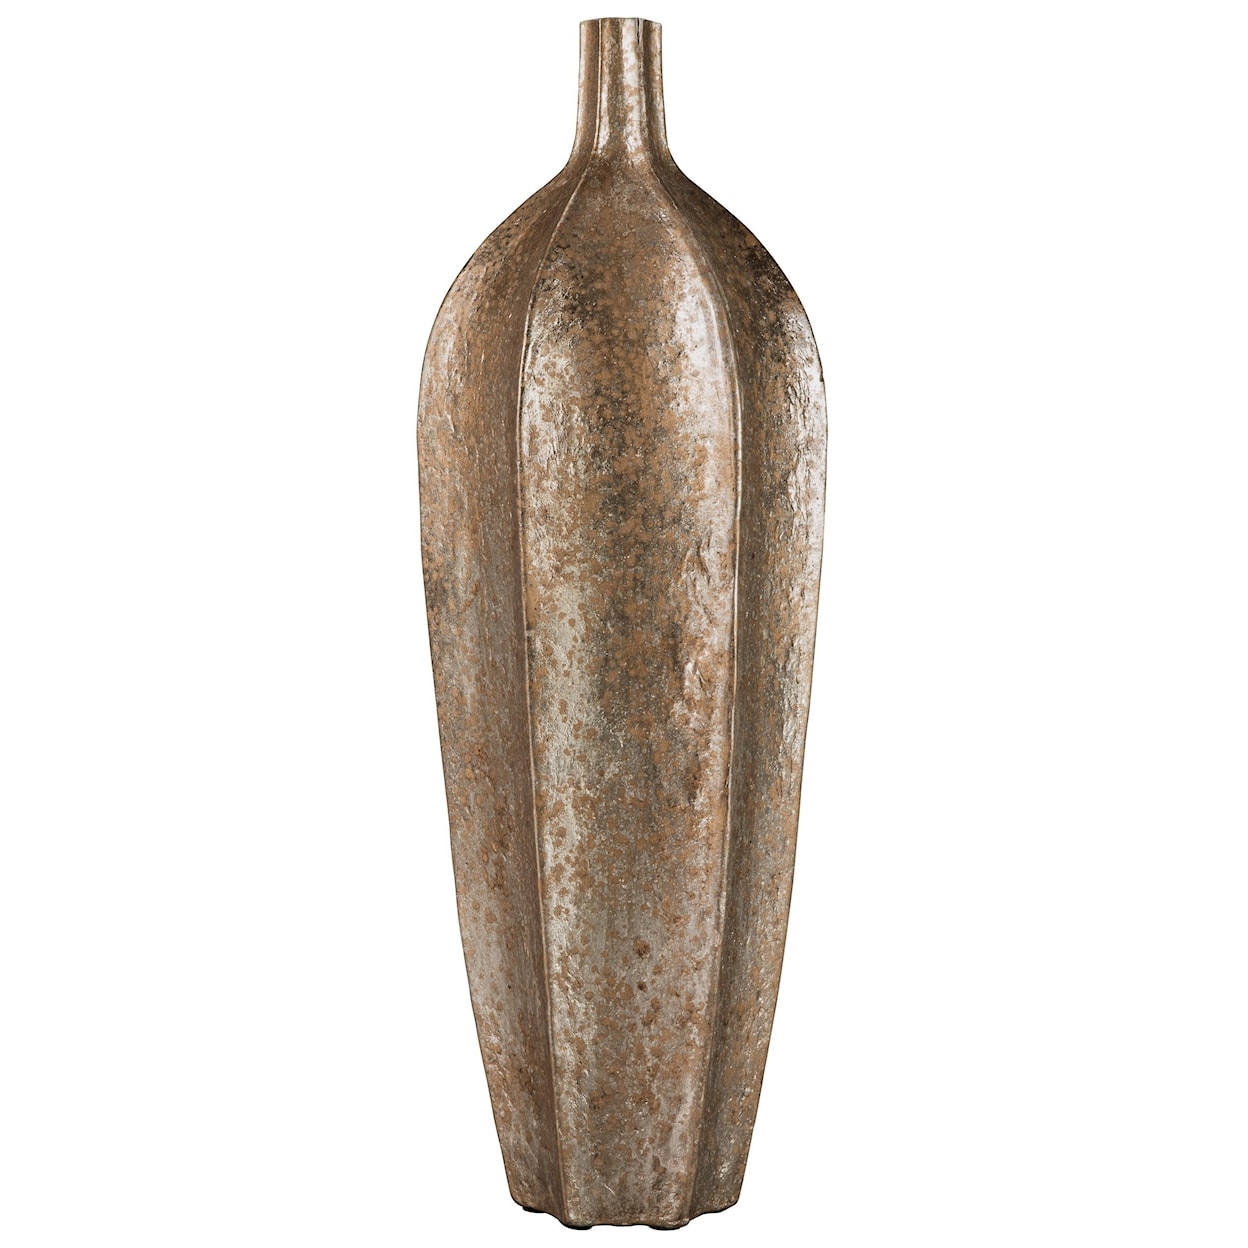 Ashley Furniture Signature Design Accents Derion Antique Gold Finish Vase